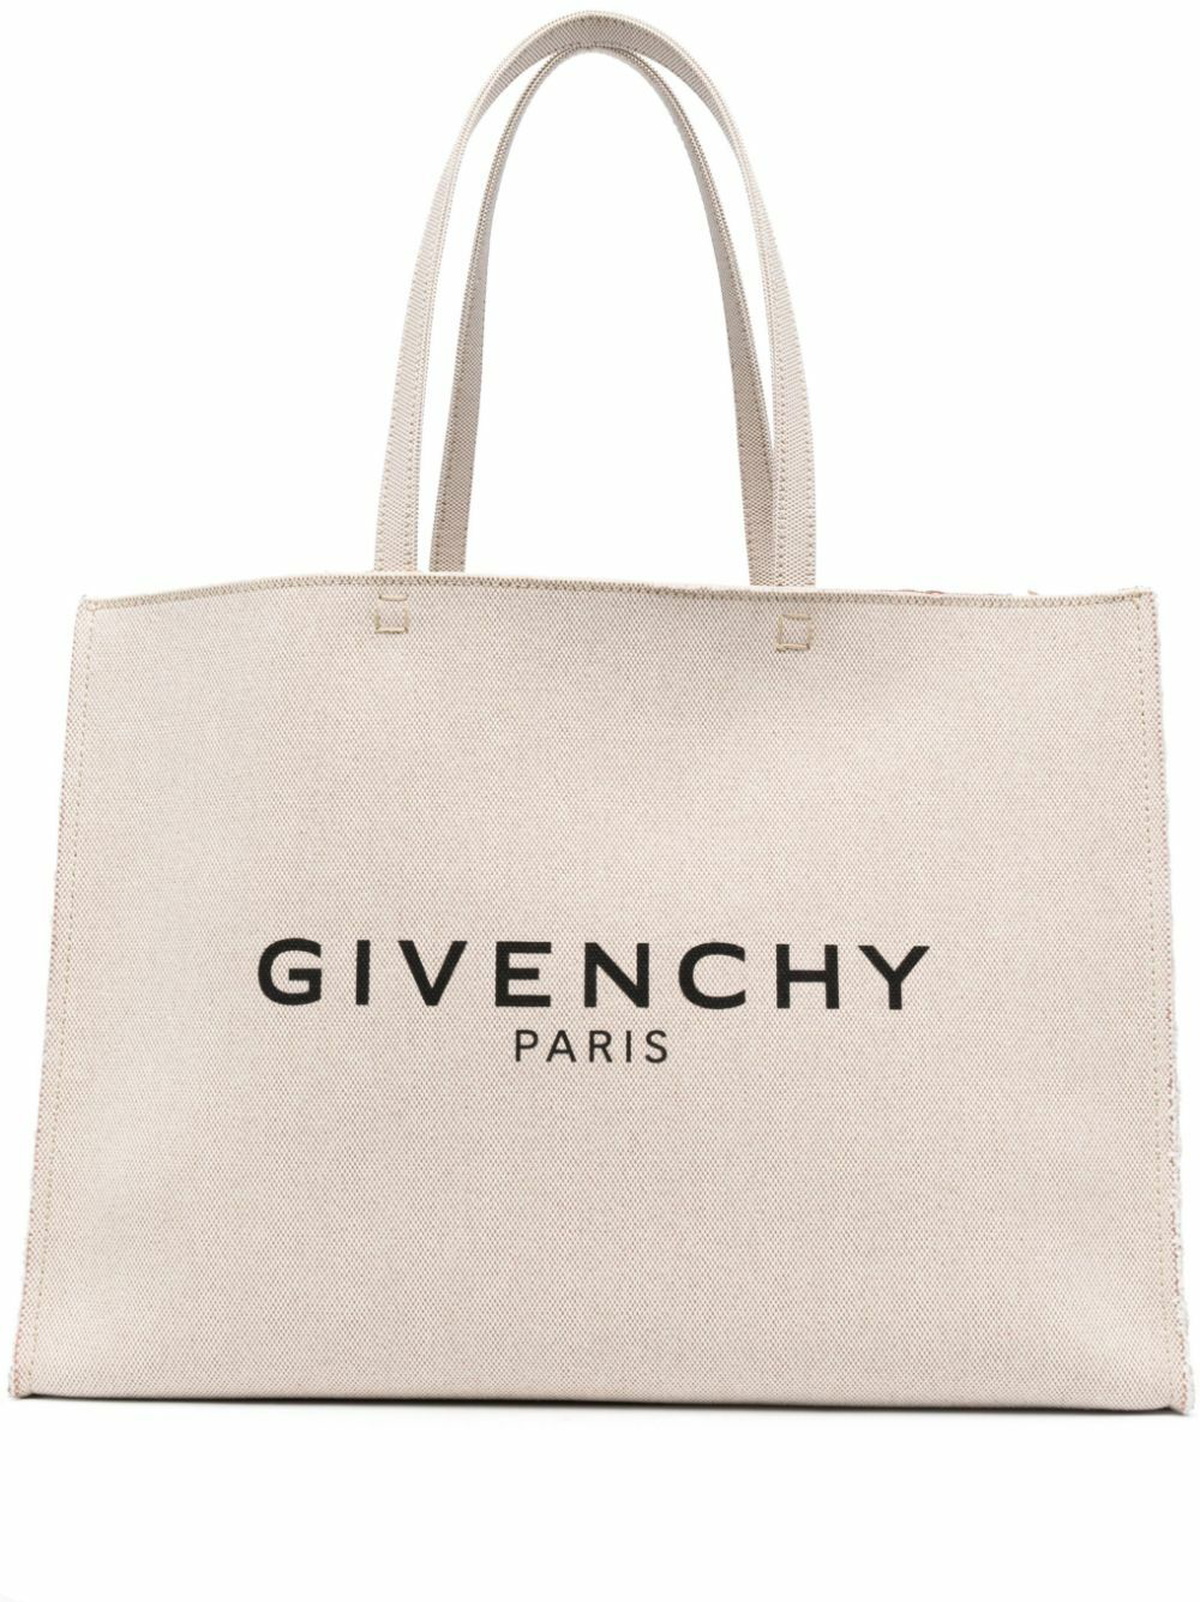 GIVENCHY - G-tote Large Canvas Shopping Bag Givenchy